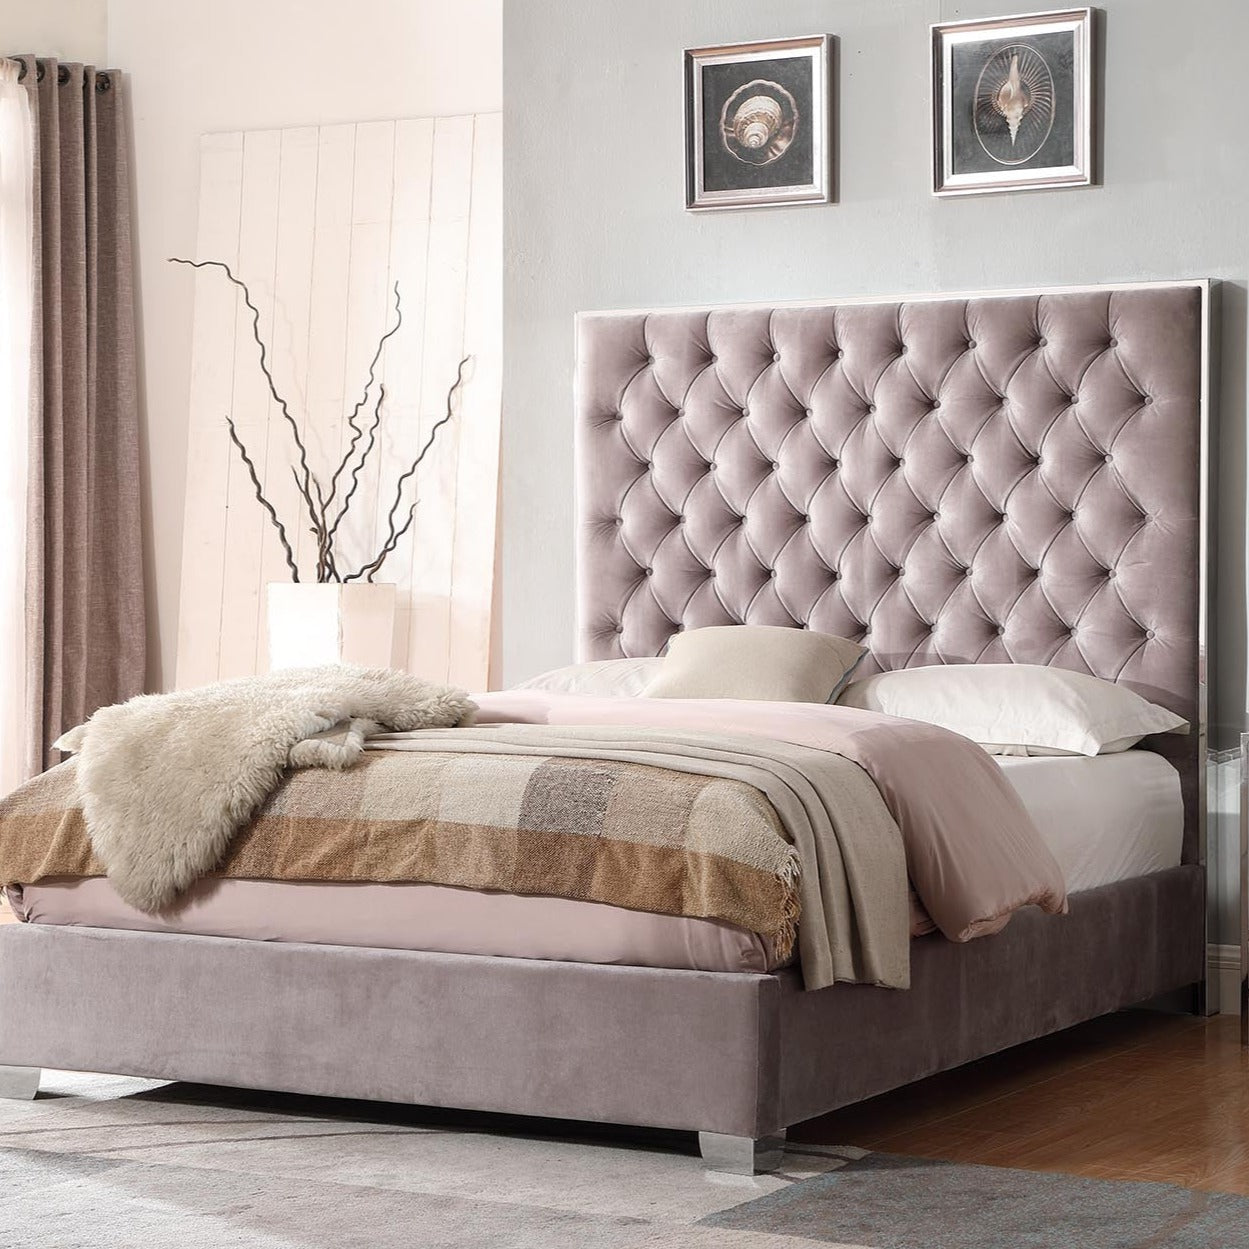 B112 - KIARA King Size Bed - 45676